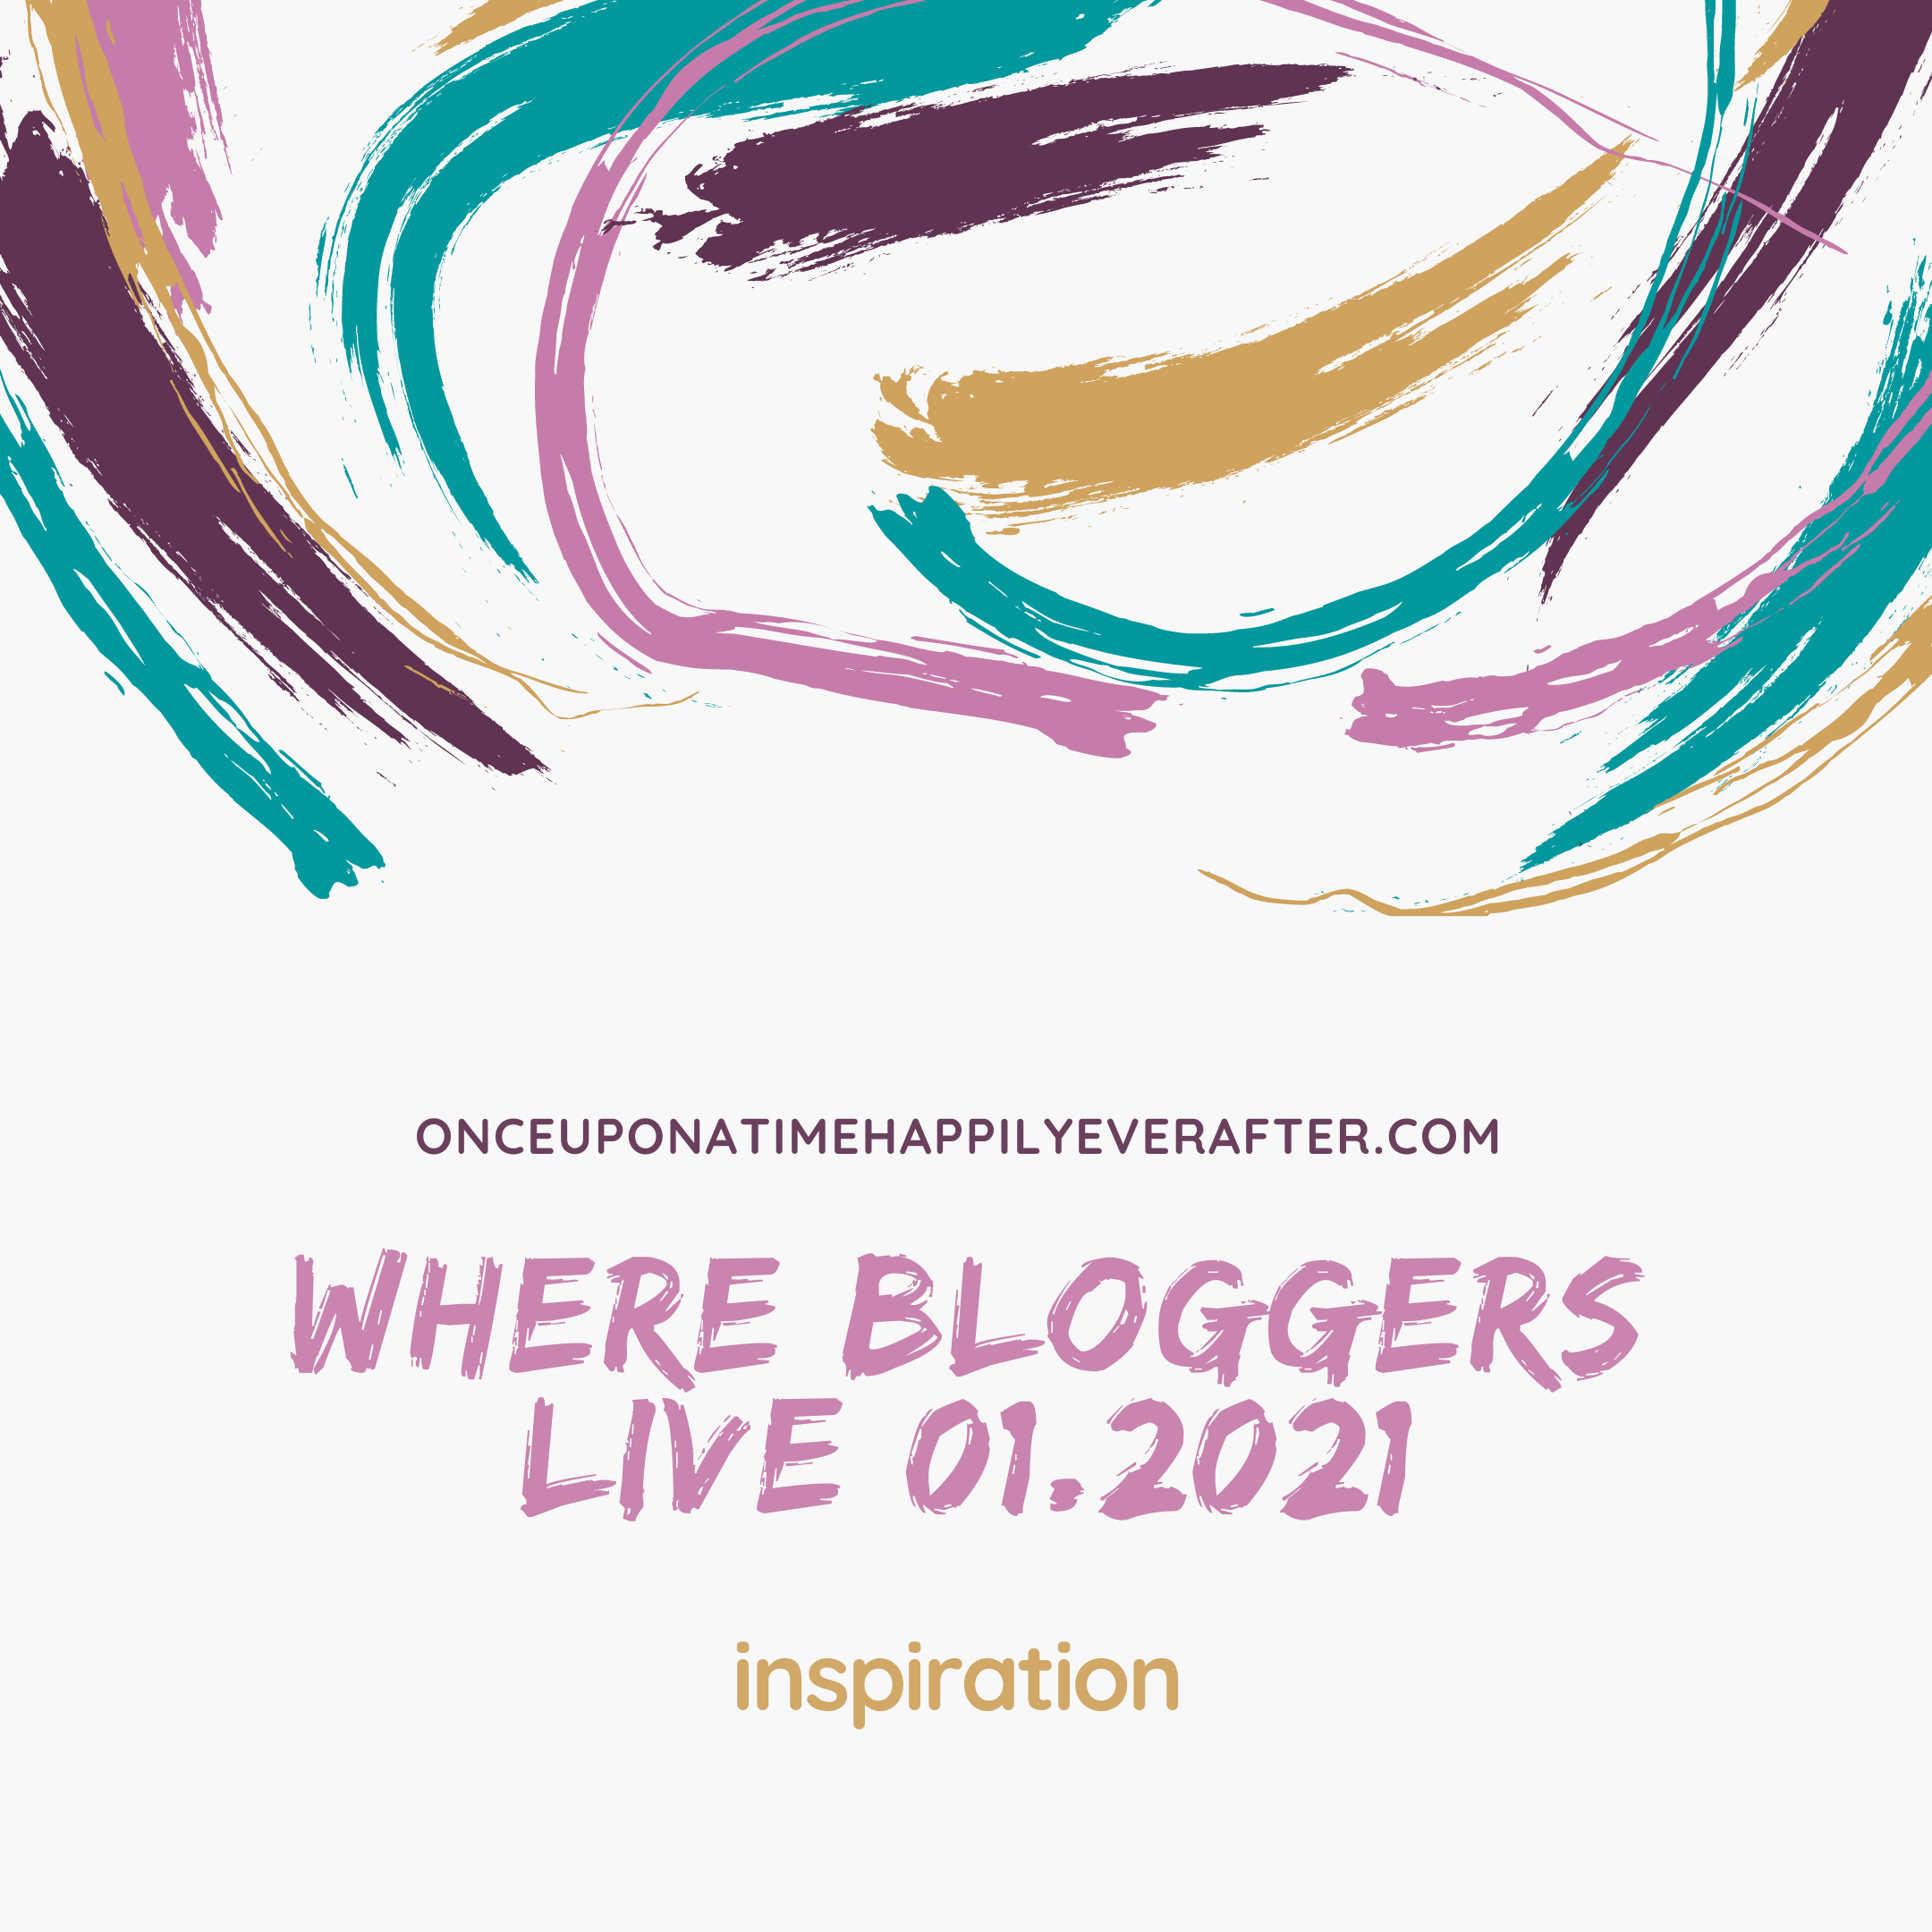 Where Bloggers Live 01.2021: Inspiration